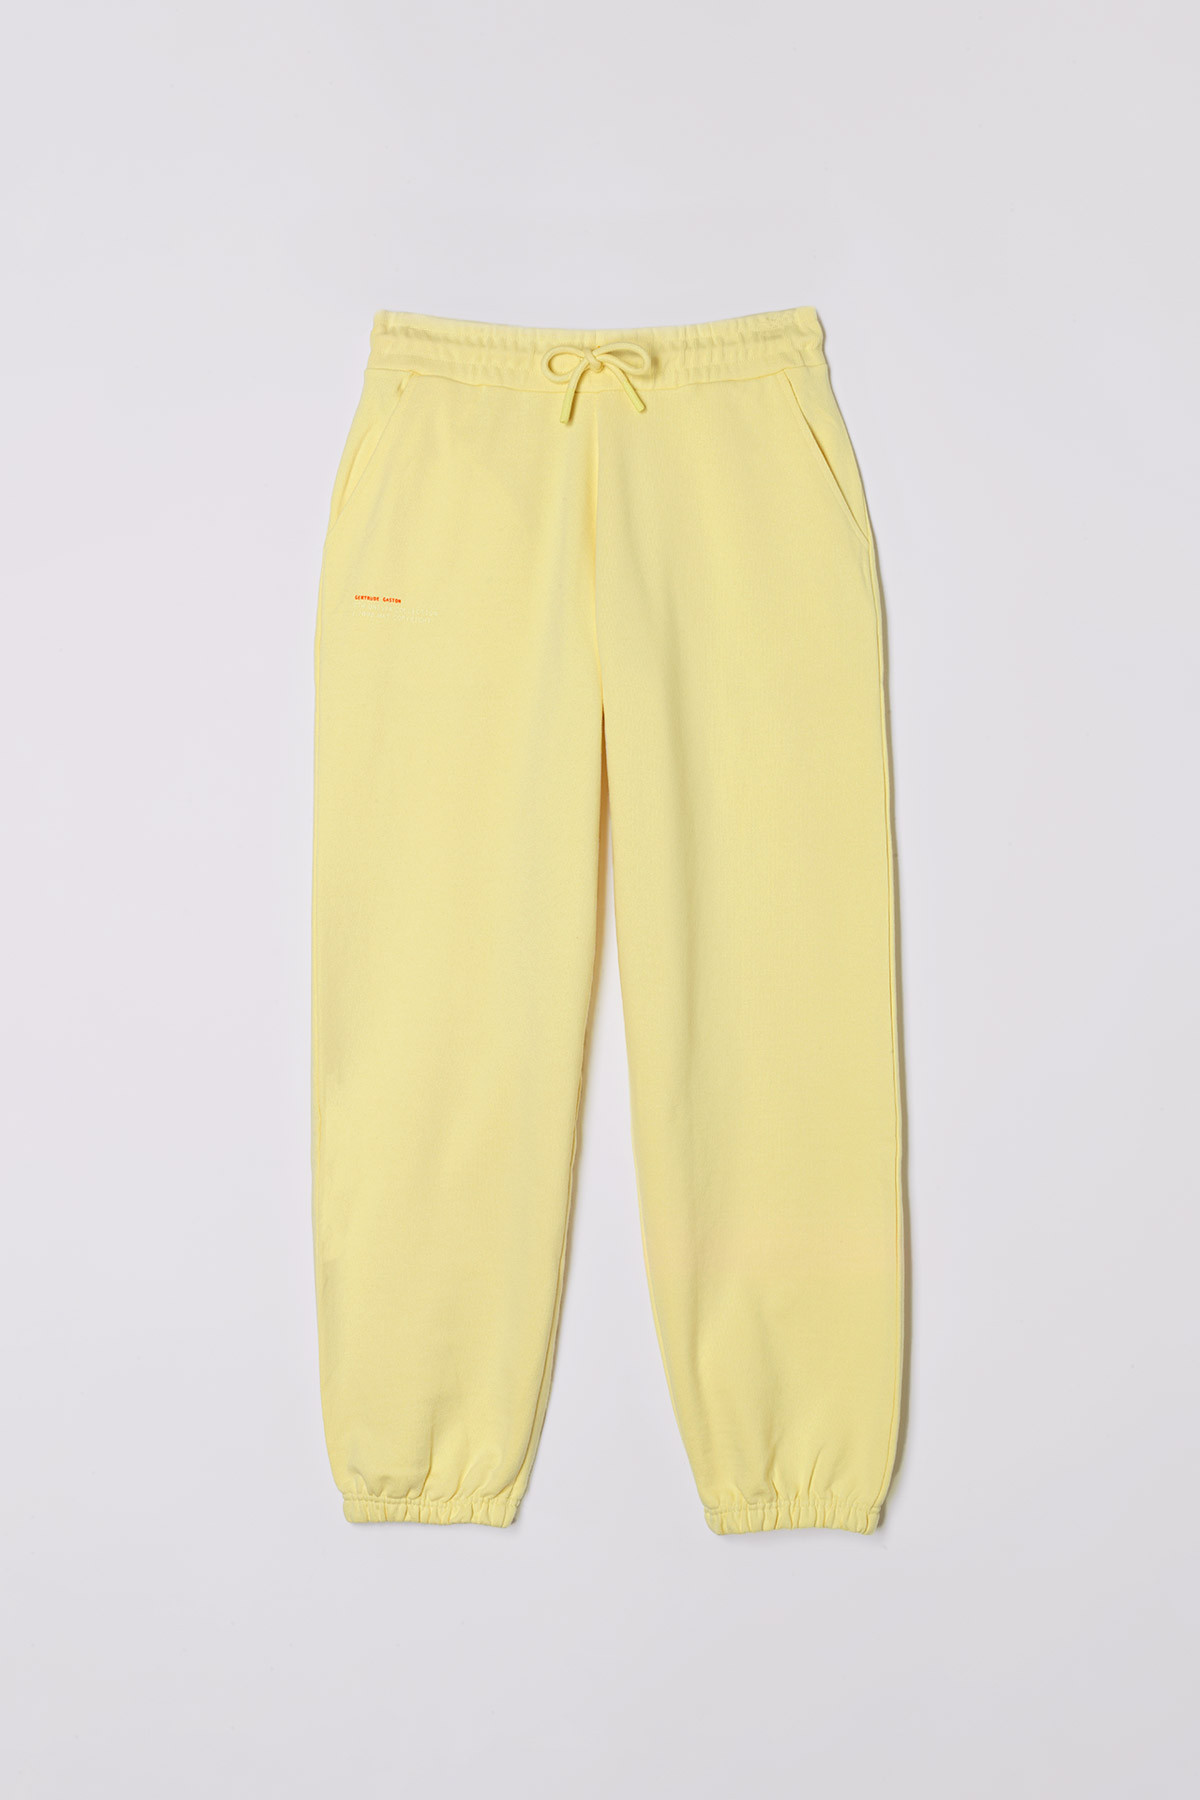 Loose unisex jogging suit Max Yellow